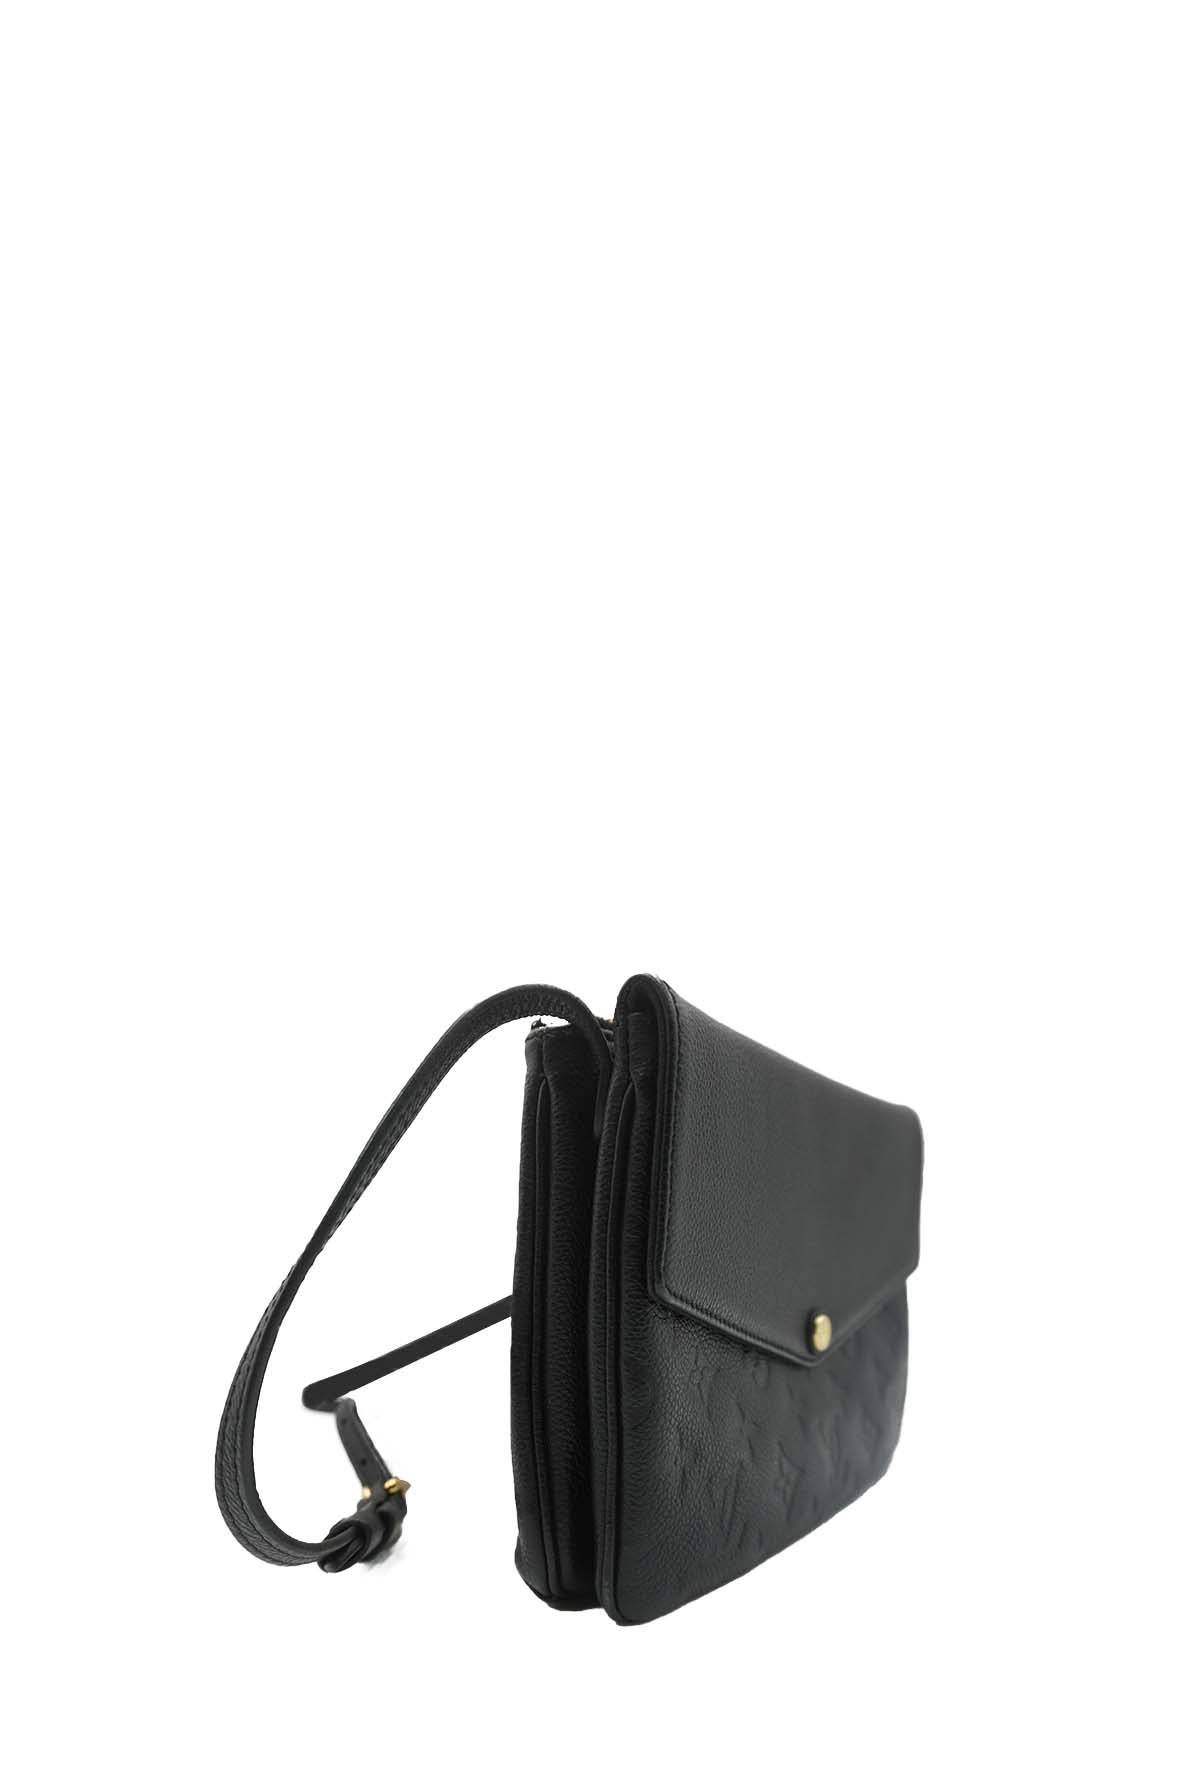 LOUIS VUITTON Black Monogram Empreinte Leather Twice Crossbody Bag